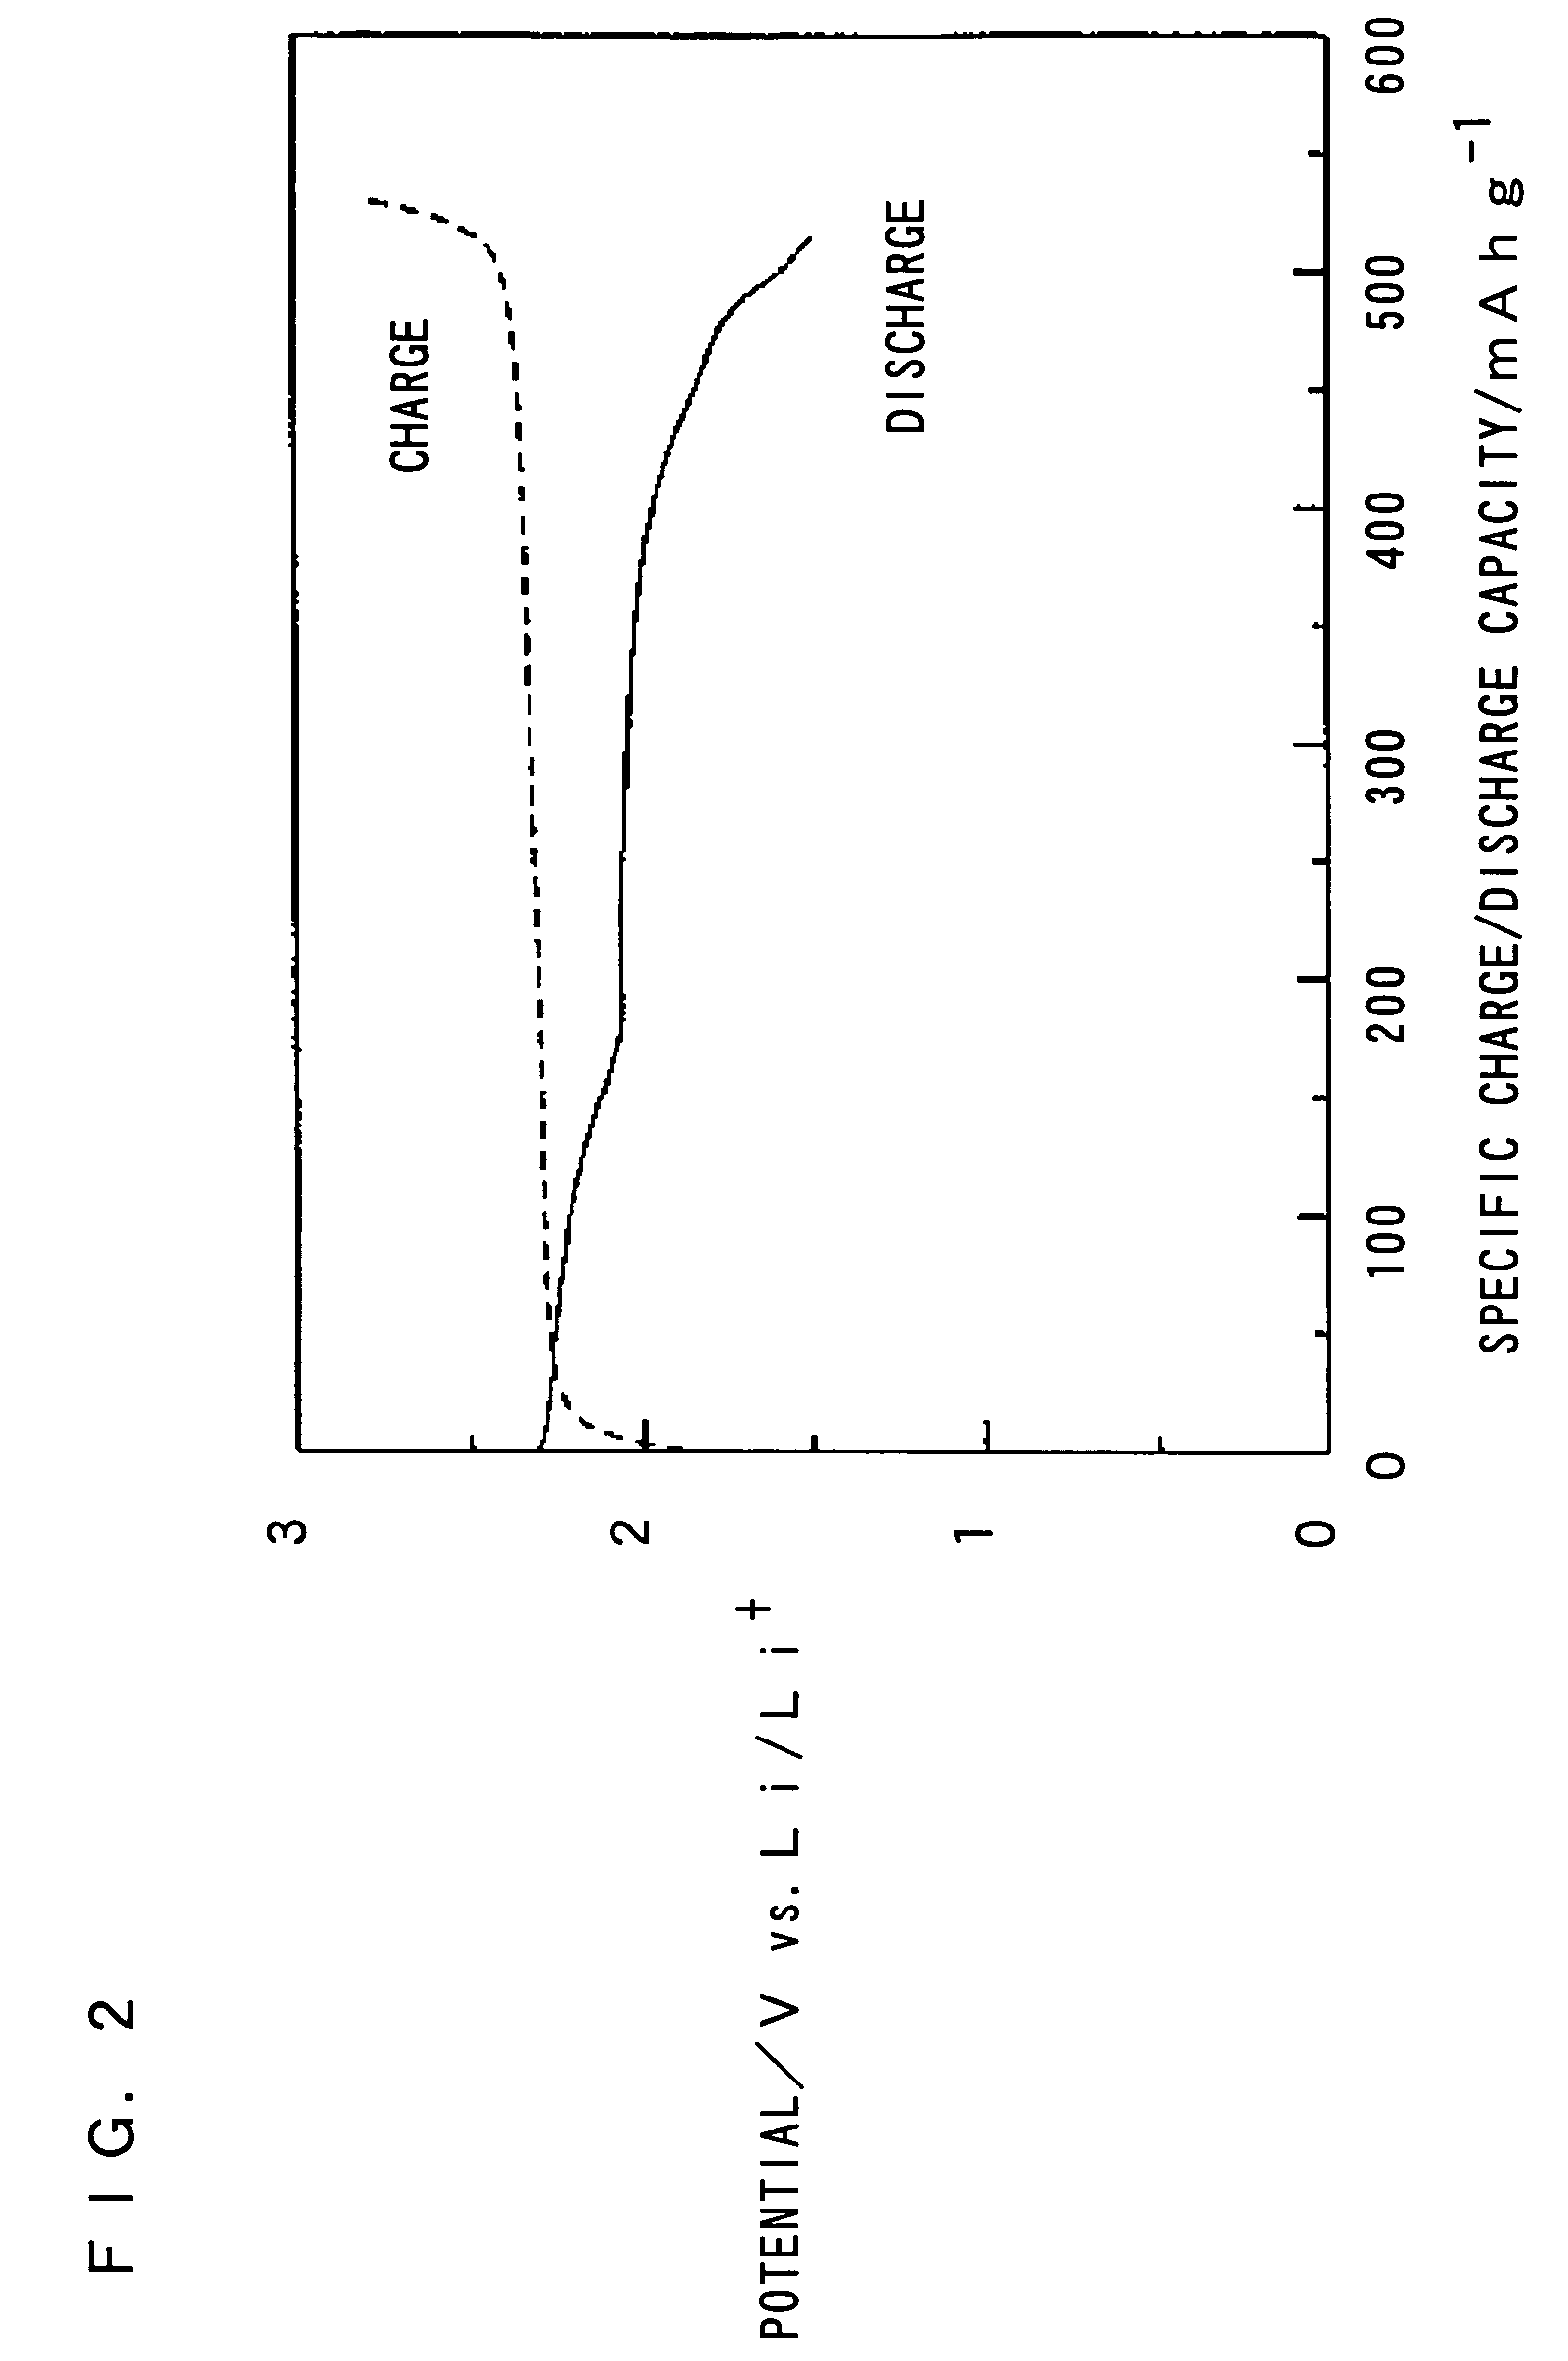 Nonaqueous electrolyte secondary battery